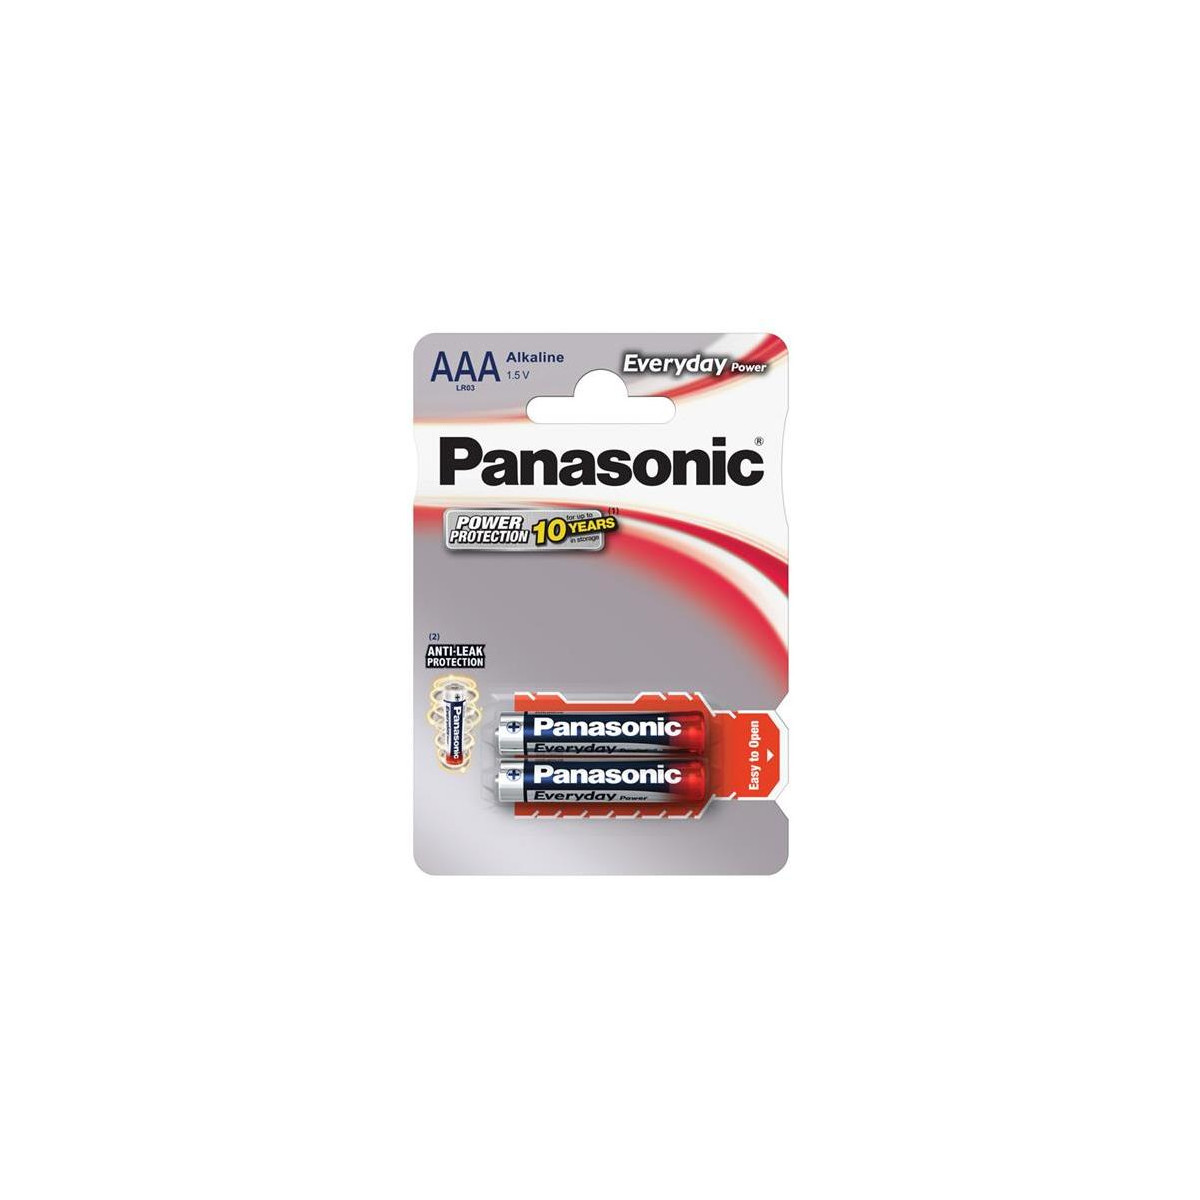 More about Baterie AAA (R03) alkalická PANASONIC Everyday Power 2ks / blistr